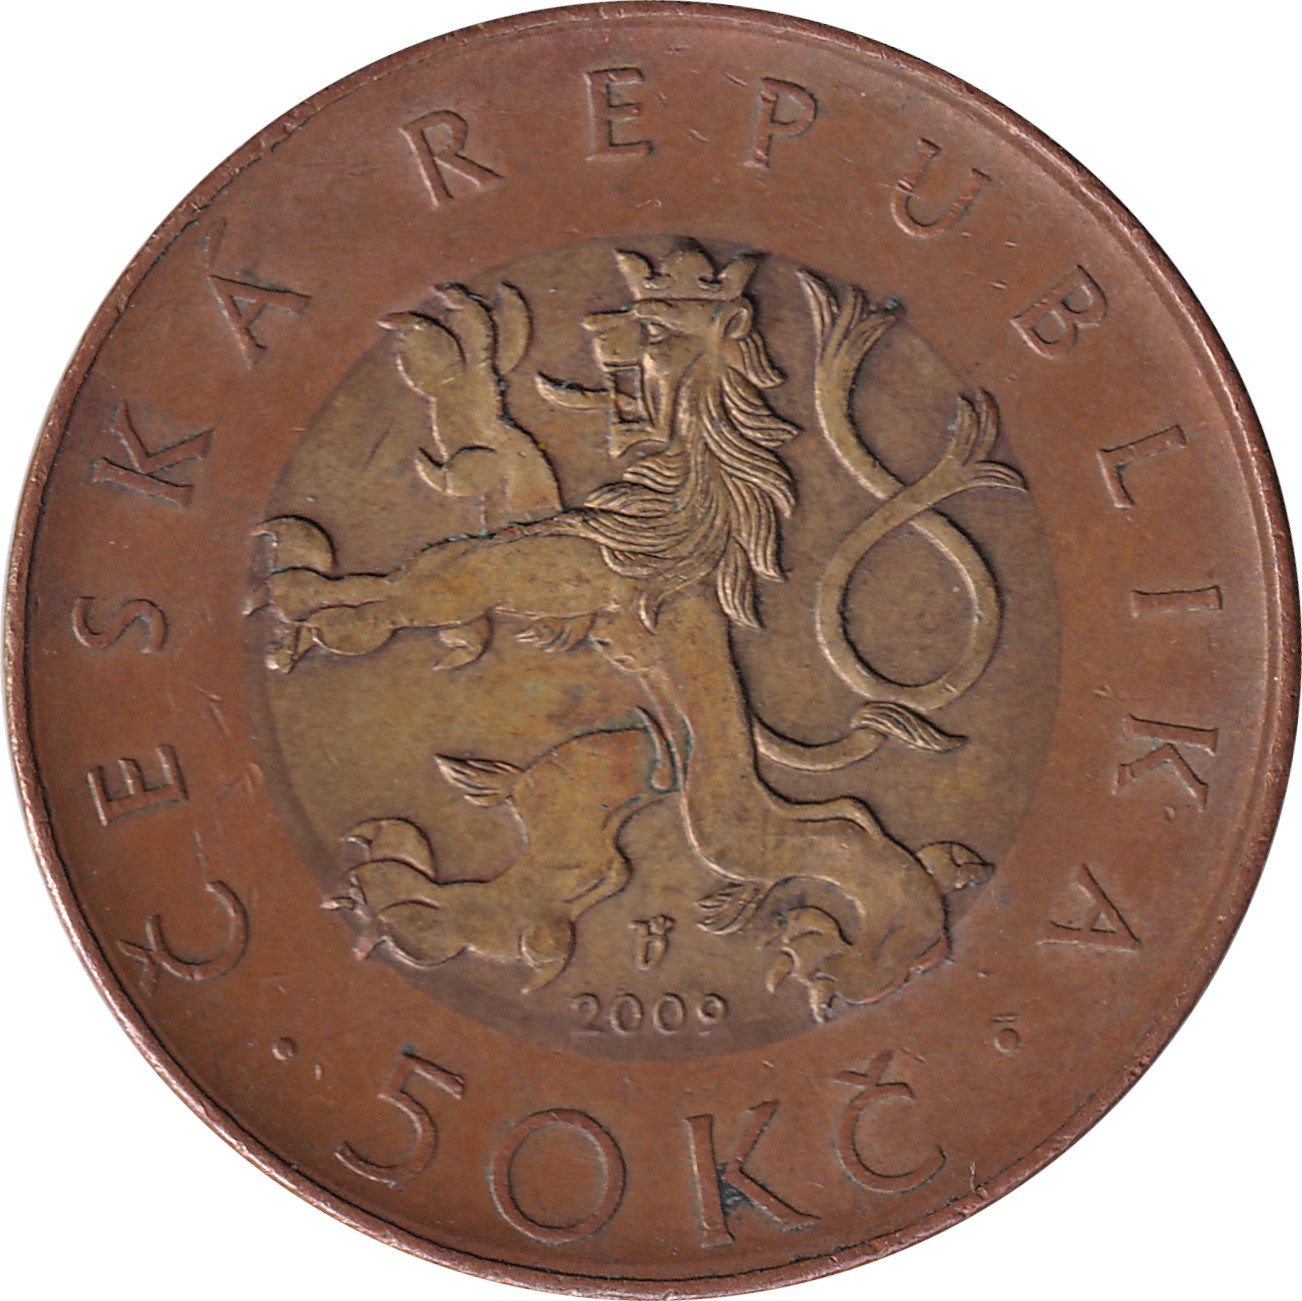 50 korun - Heraldic Lion